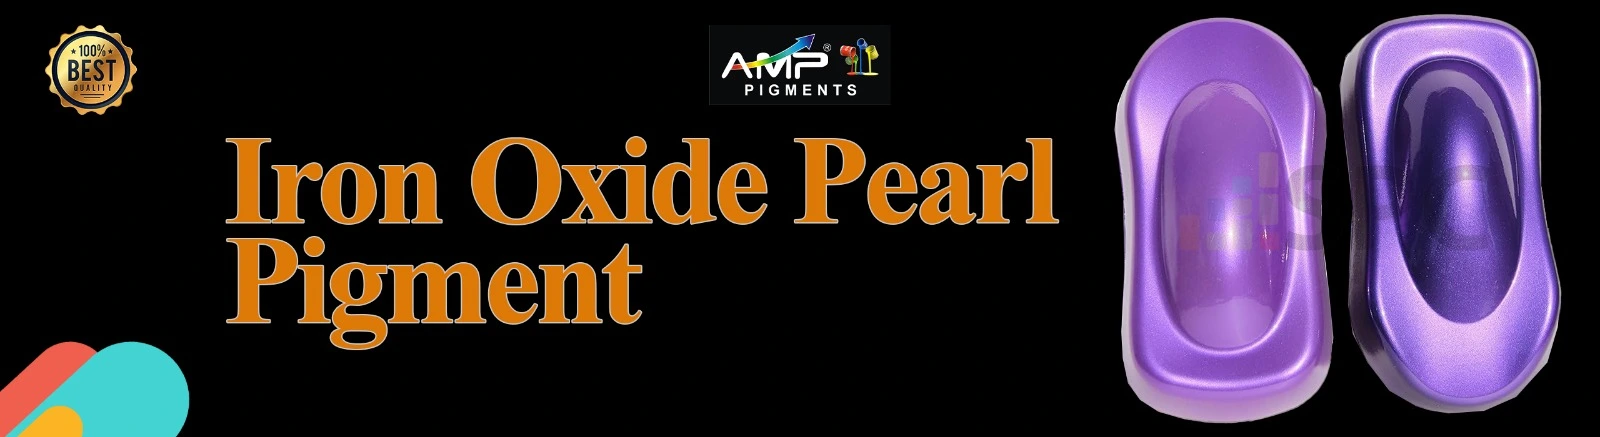 Iron Oxide Pearl Pigment